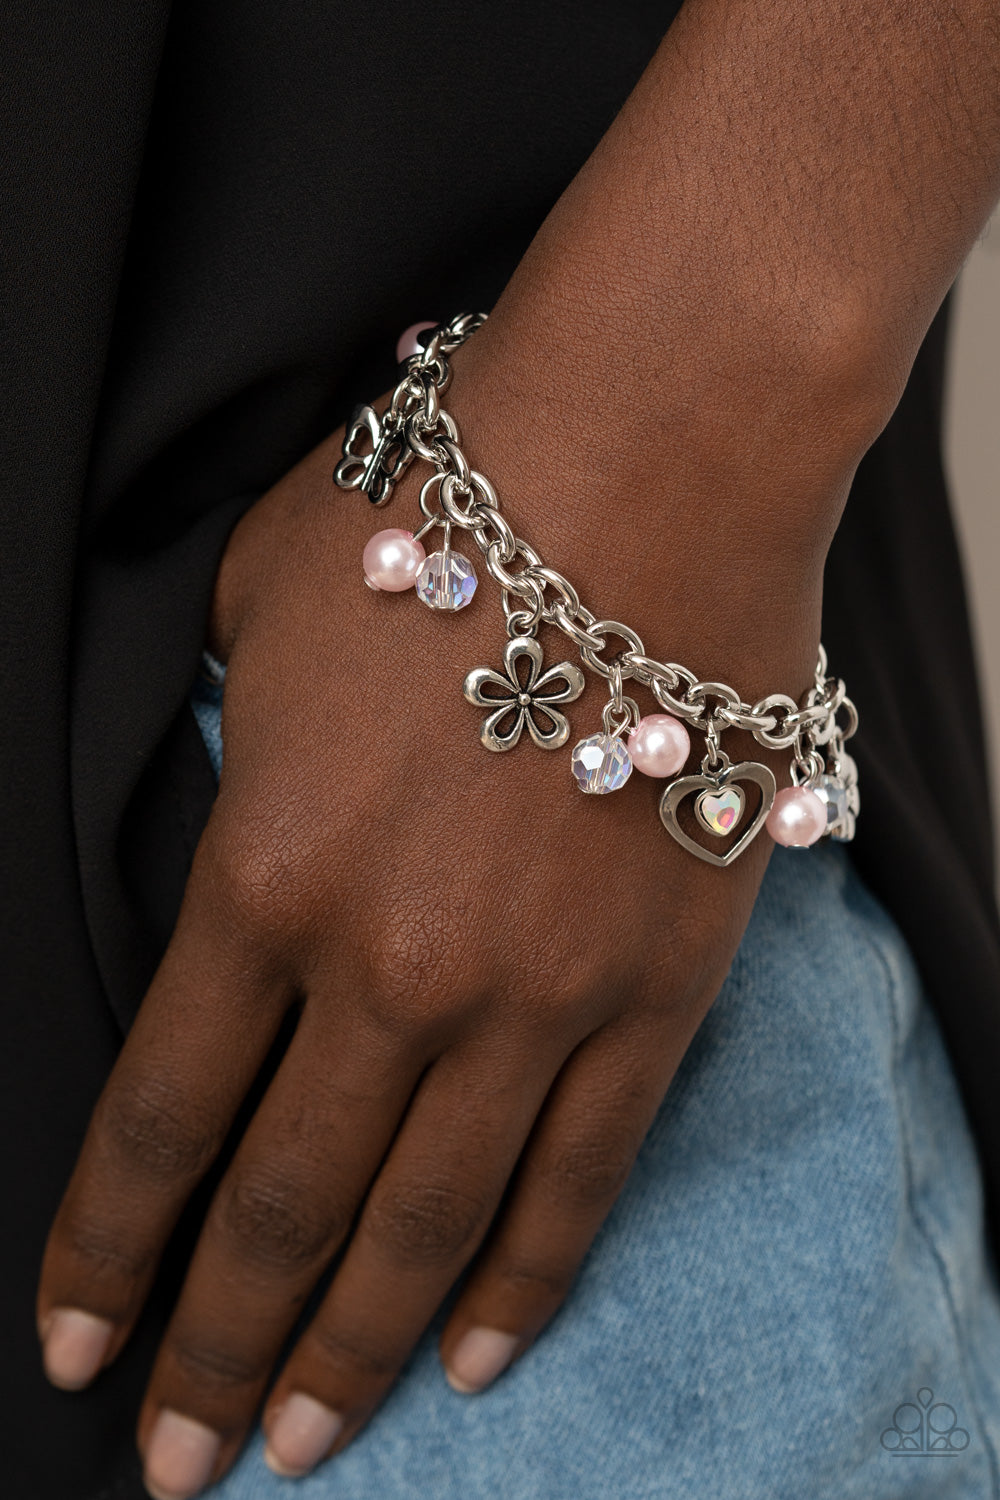 Retreat into Romance - Pink bracelet